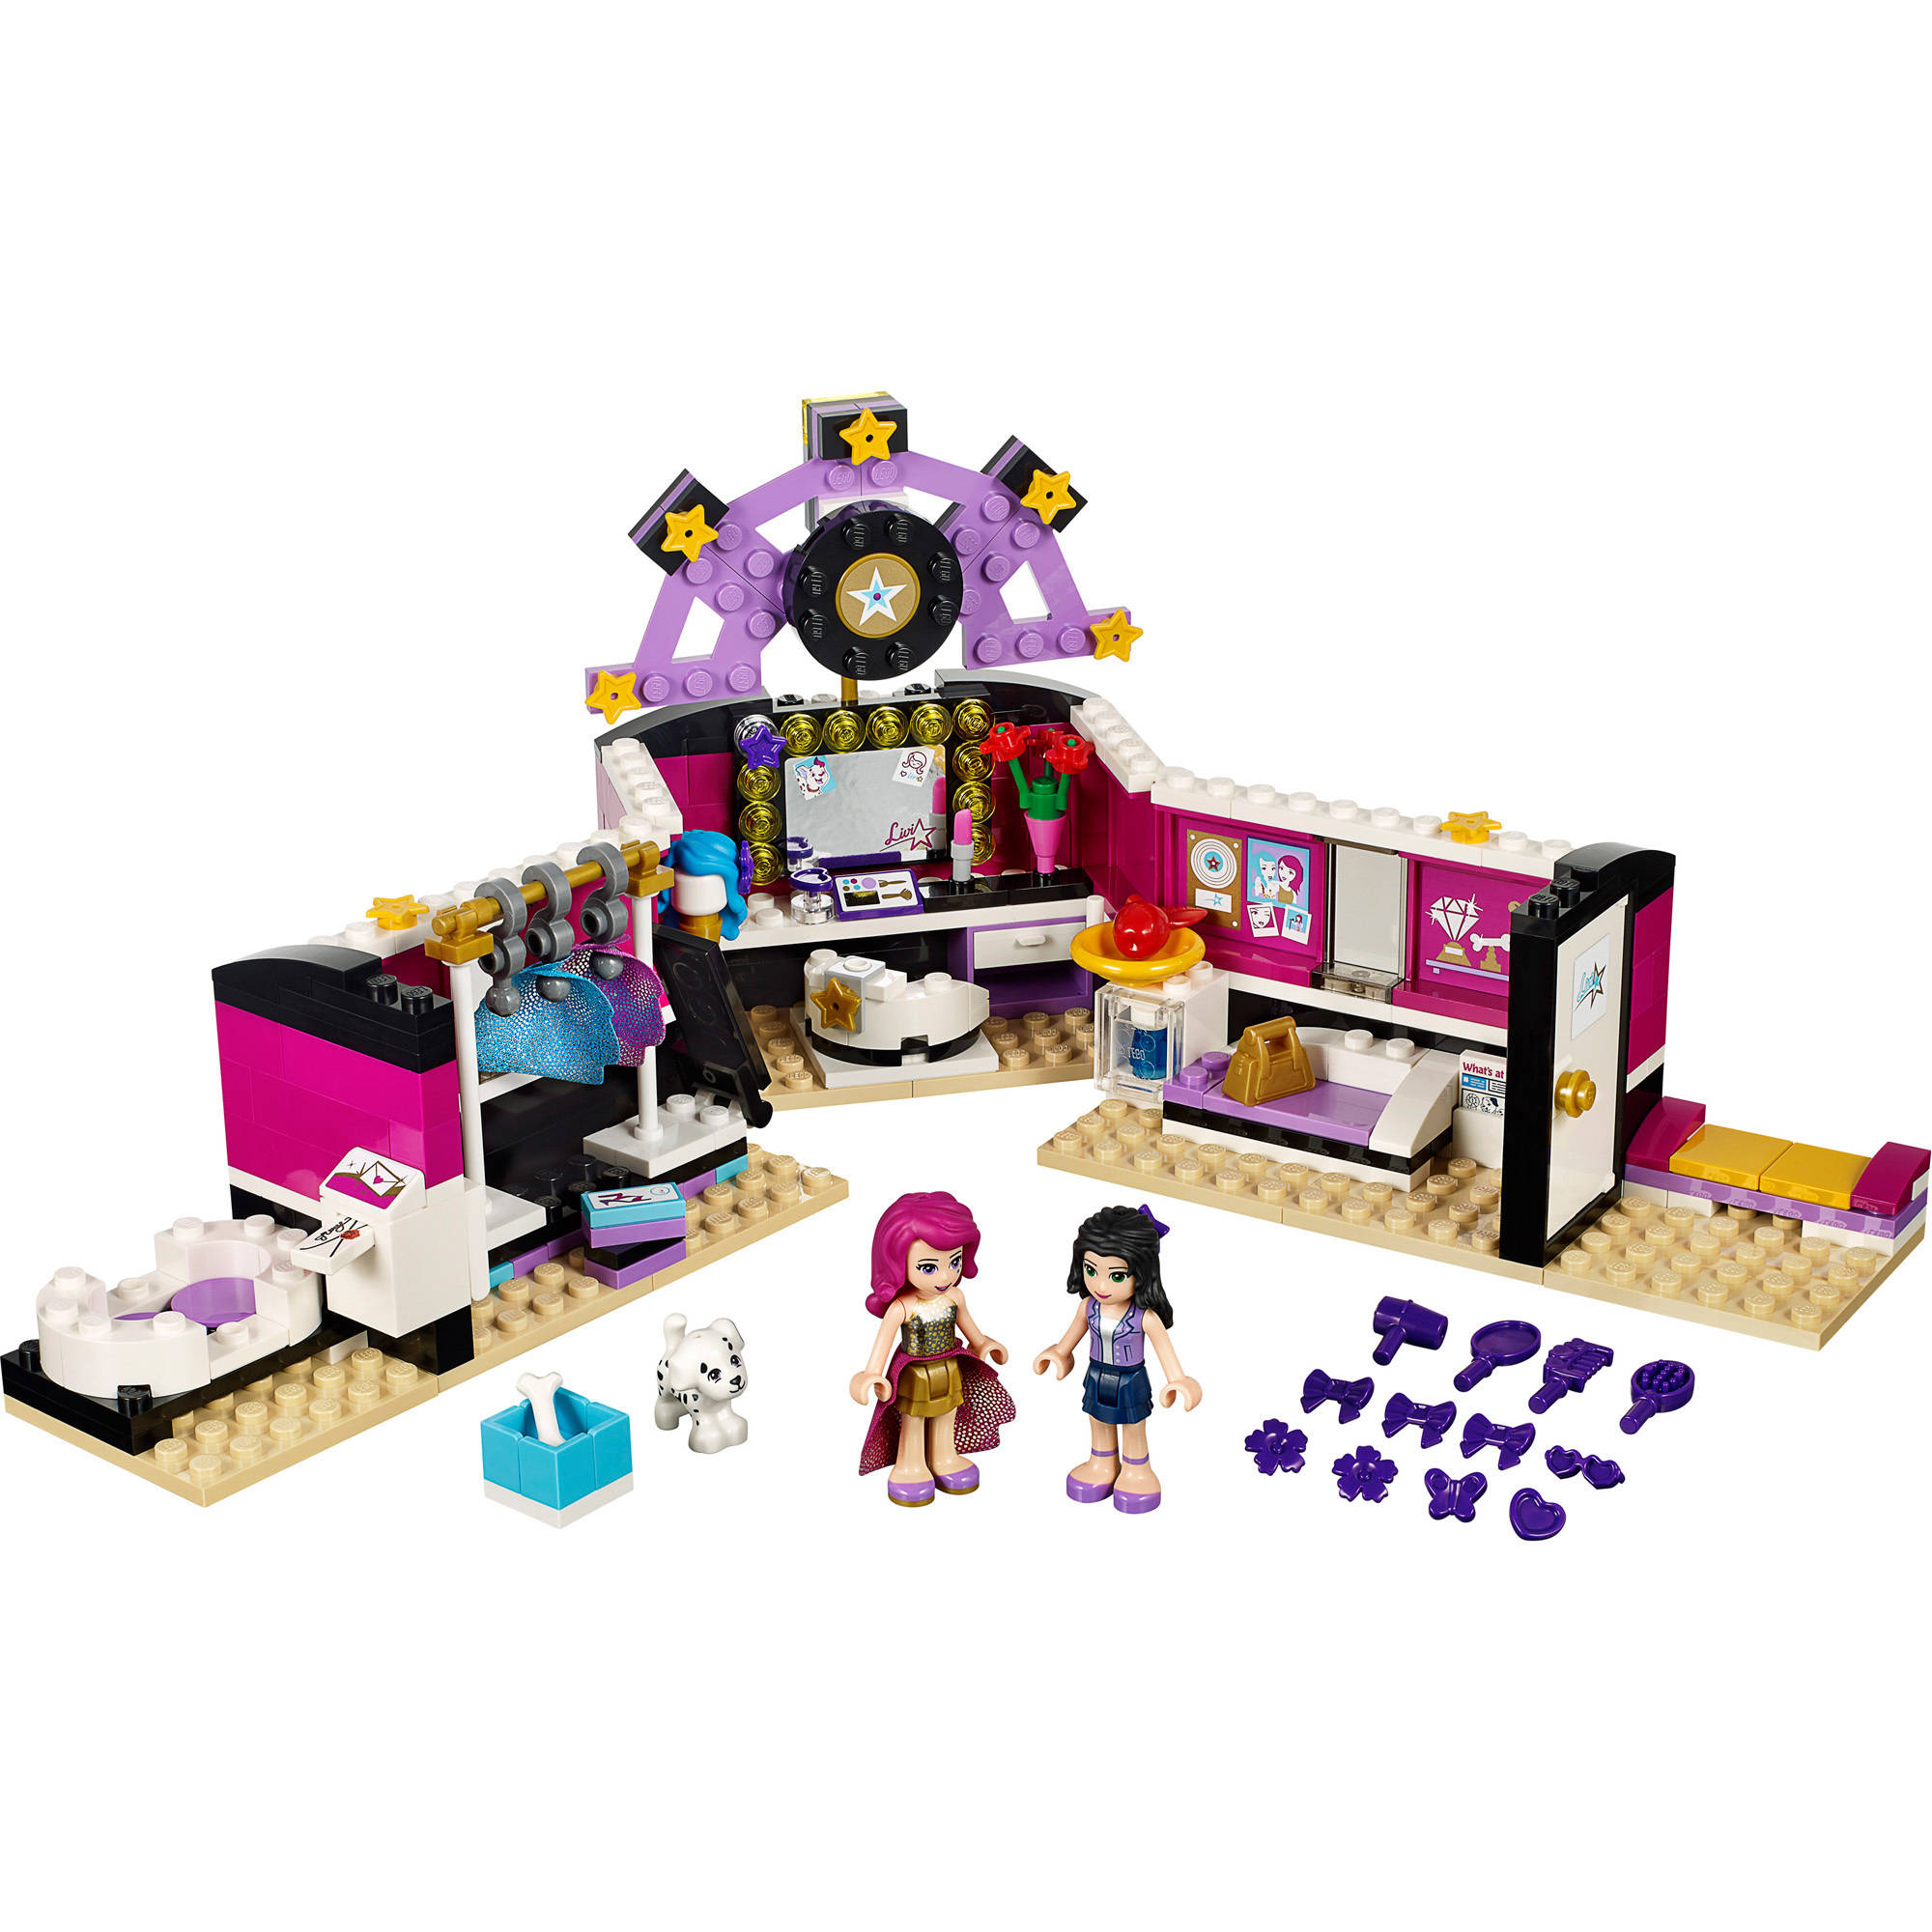 LEGO Friends 41104 Pop Star Dressing Room Building Kit - image 4 of 7